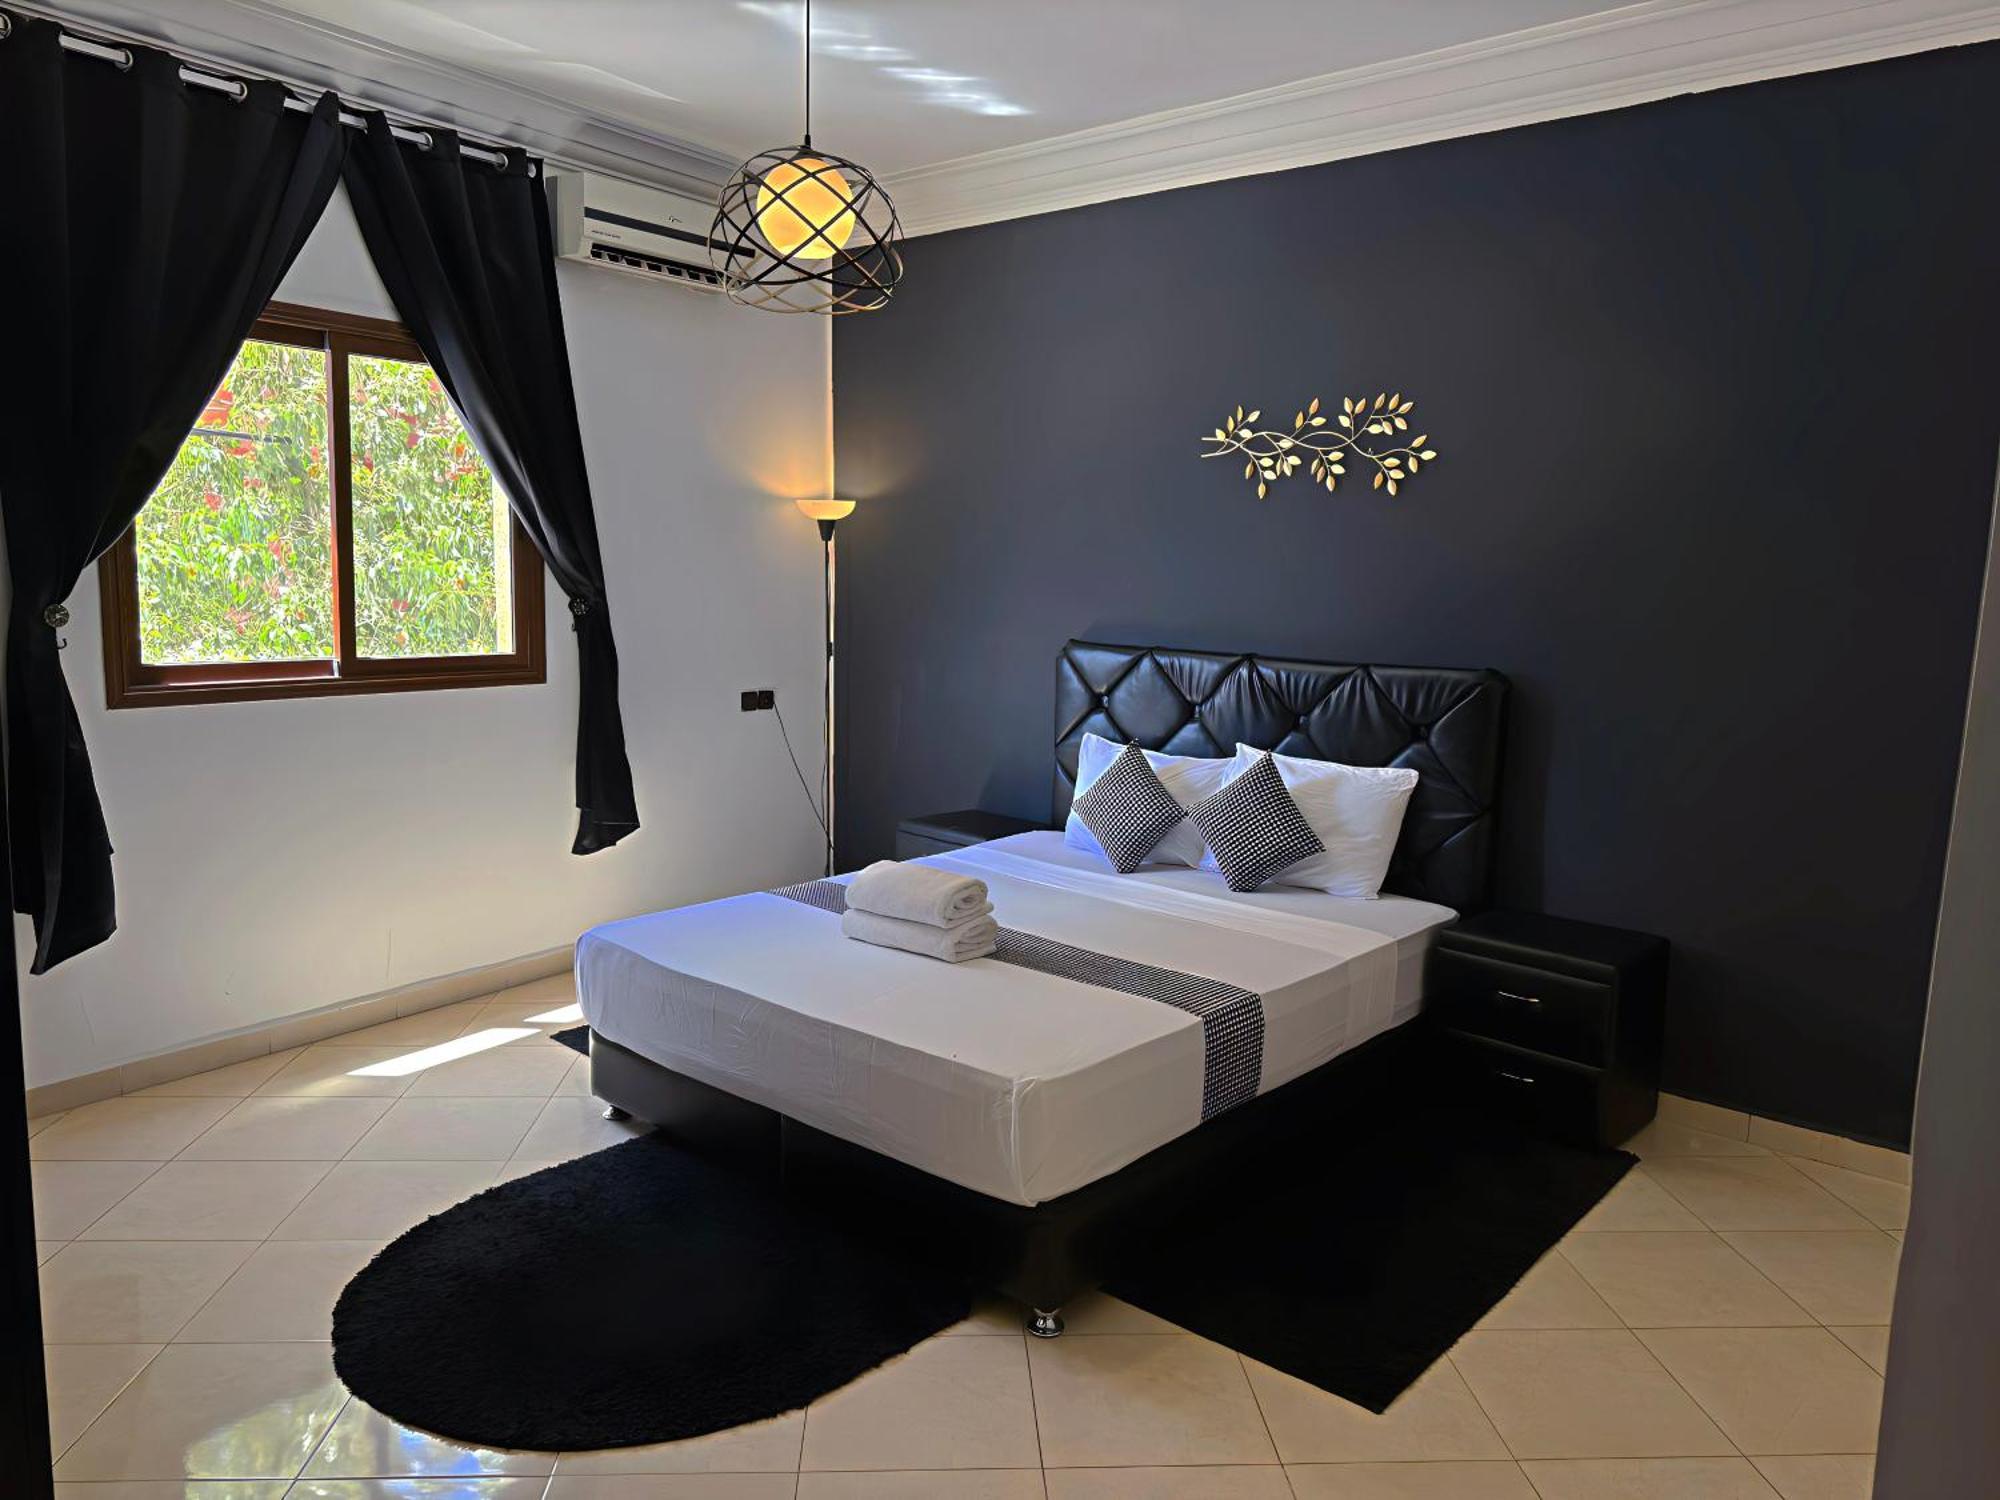 Residence Chay - Luxury Appart 瓦尔扎扎特 外观 照片